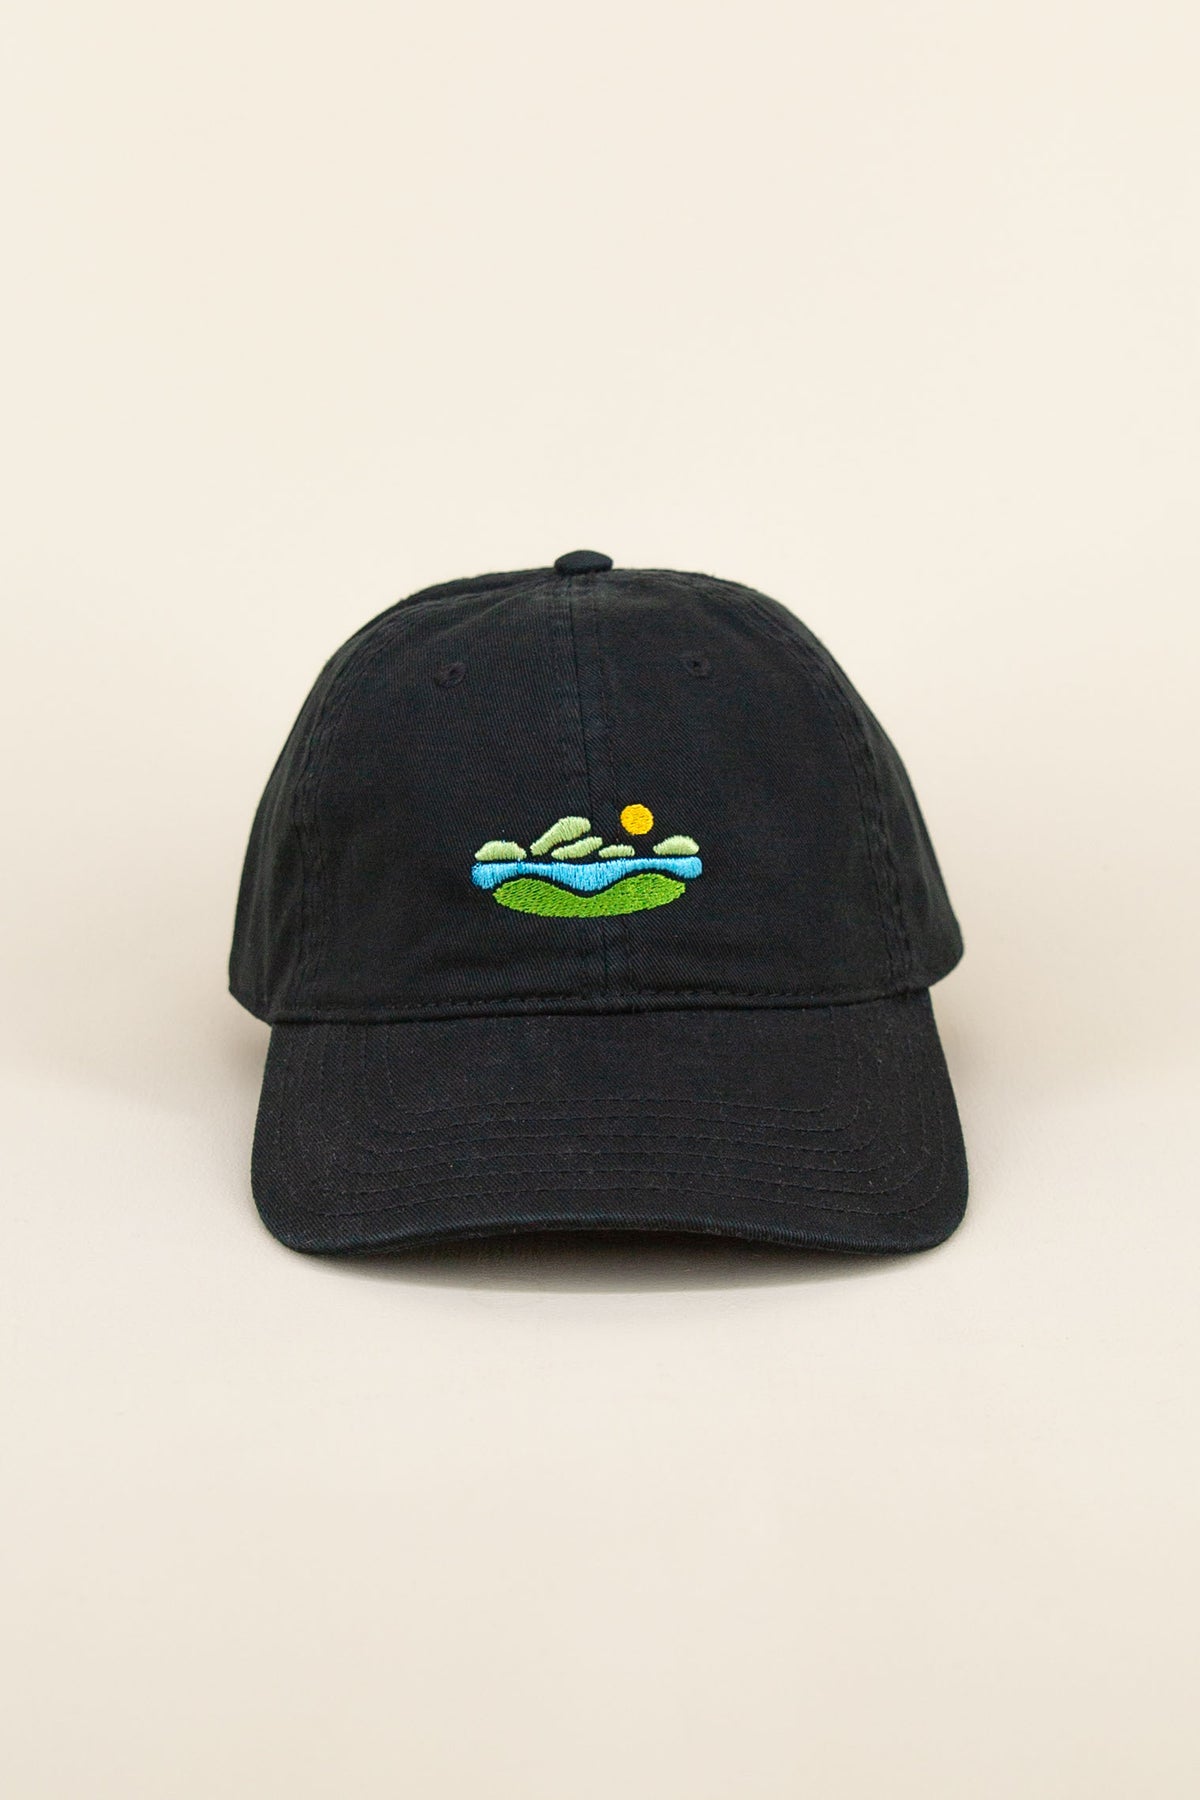 swimmin hole hat